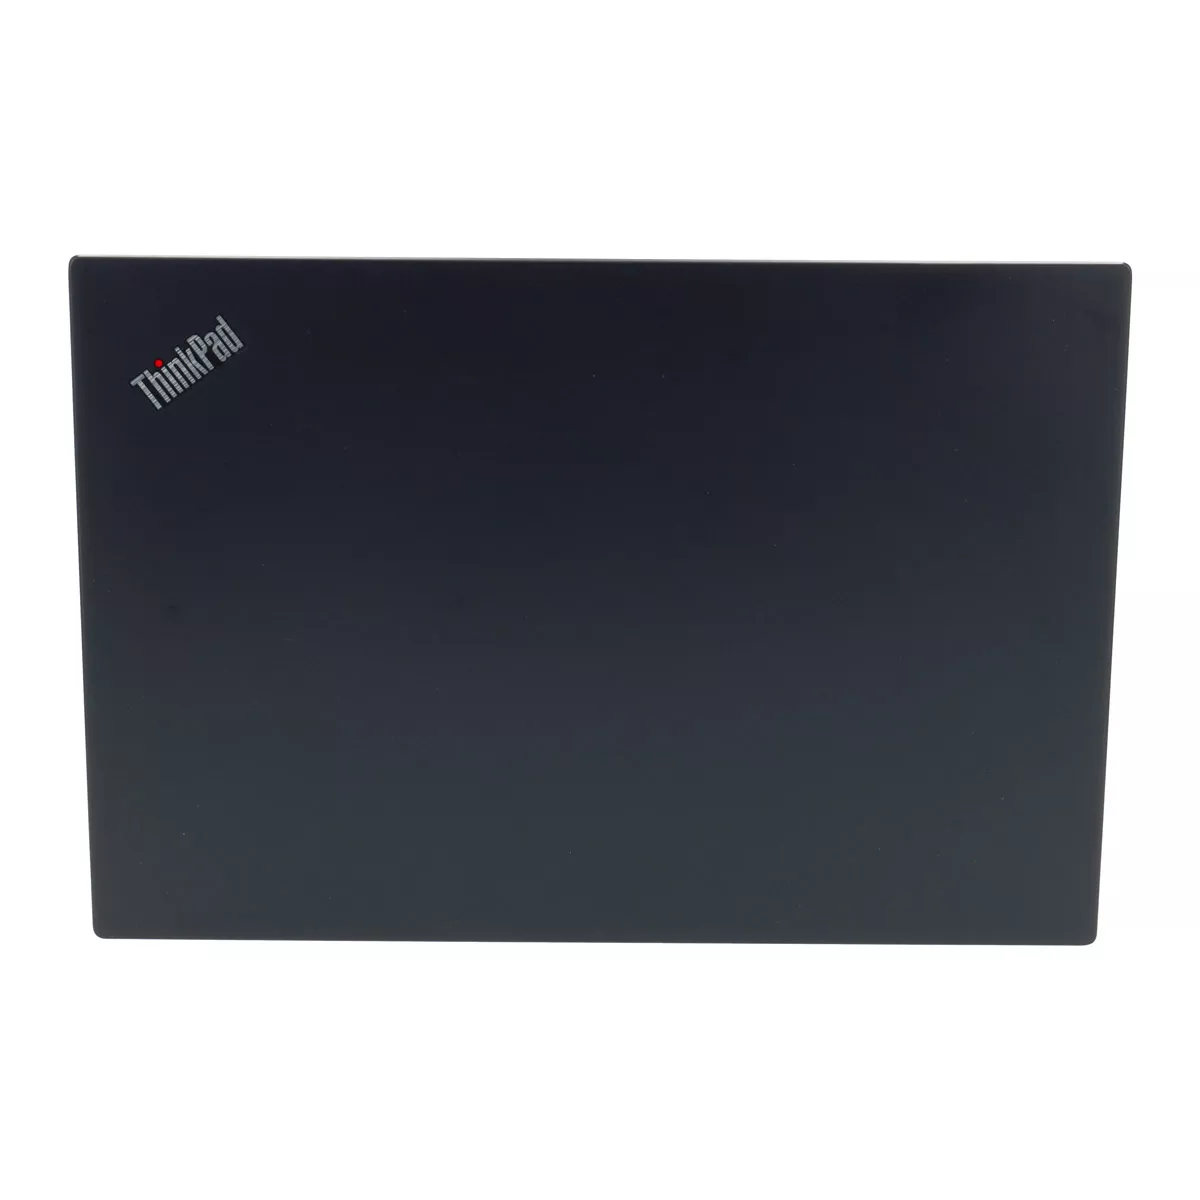 Lenovo ThinkPad T490s Core i5 8365U Full-HD Touch 16 GB 240 GB M.2 nVME SSD Webcam B